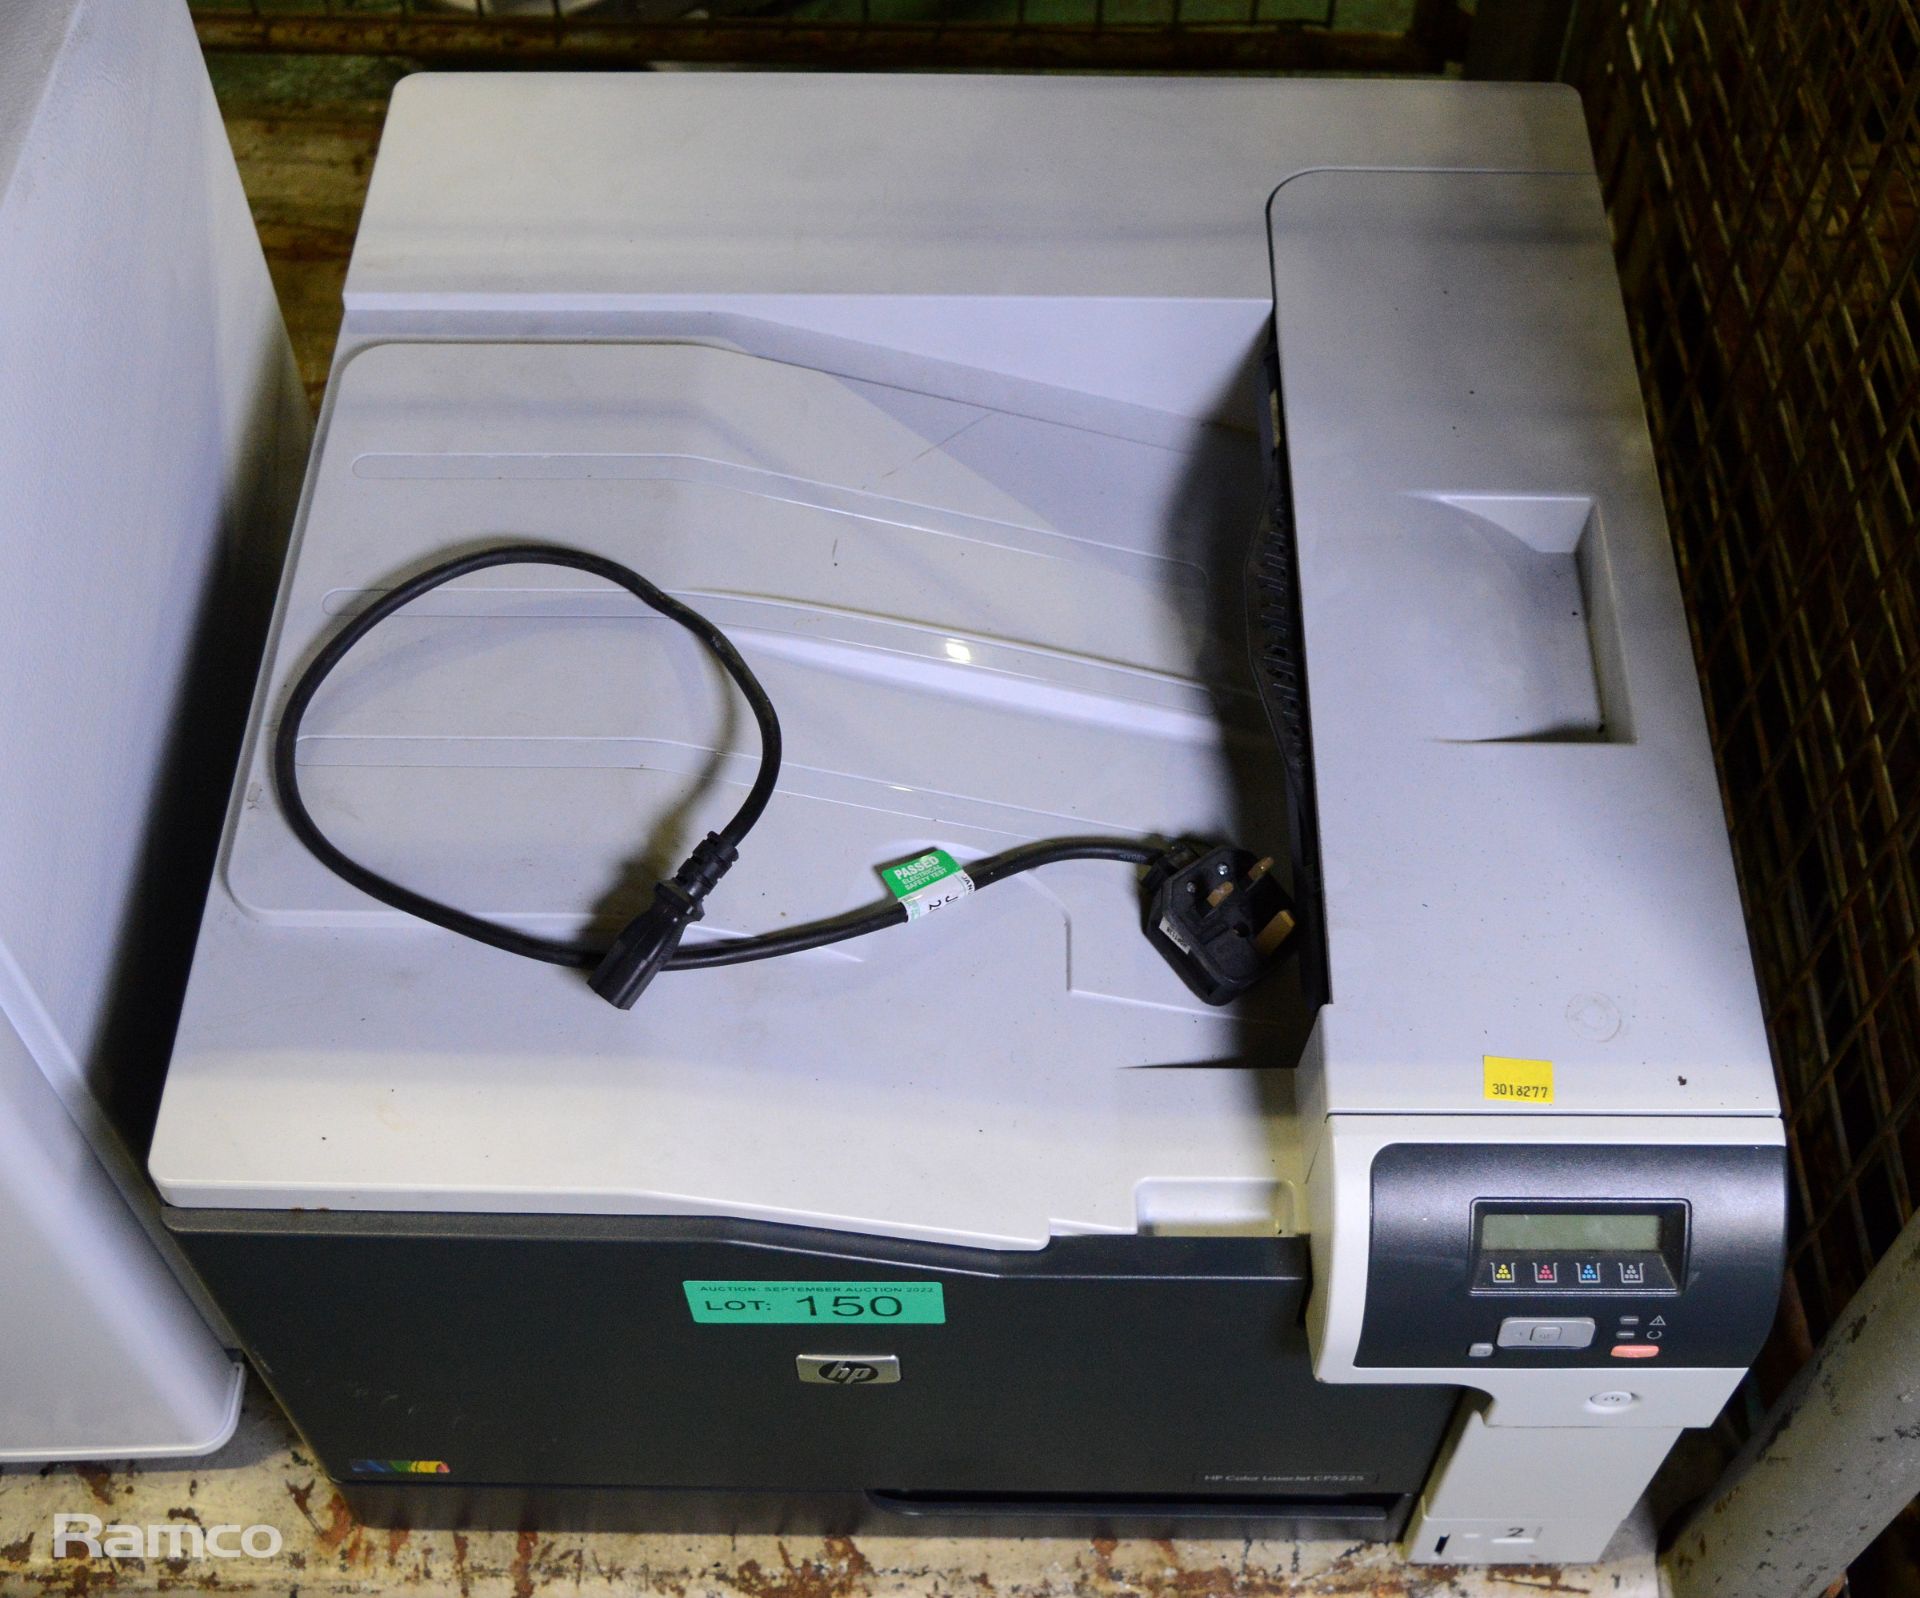 HP CP5225n A3 Colour Laser Printer - Image 4 of 8